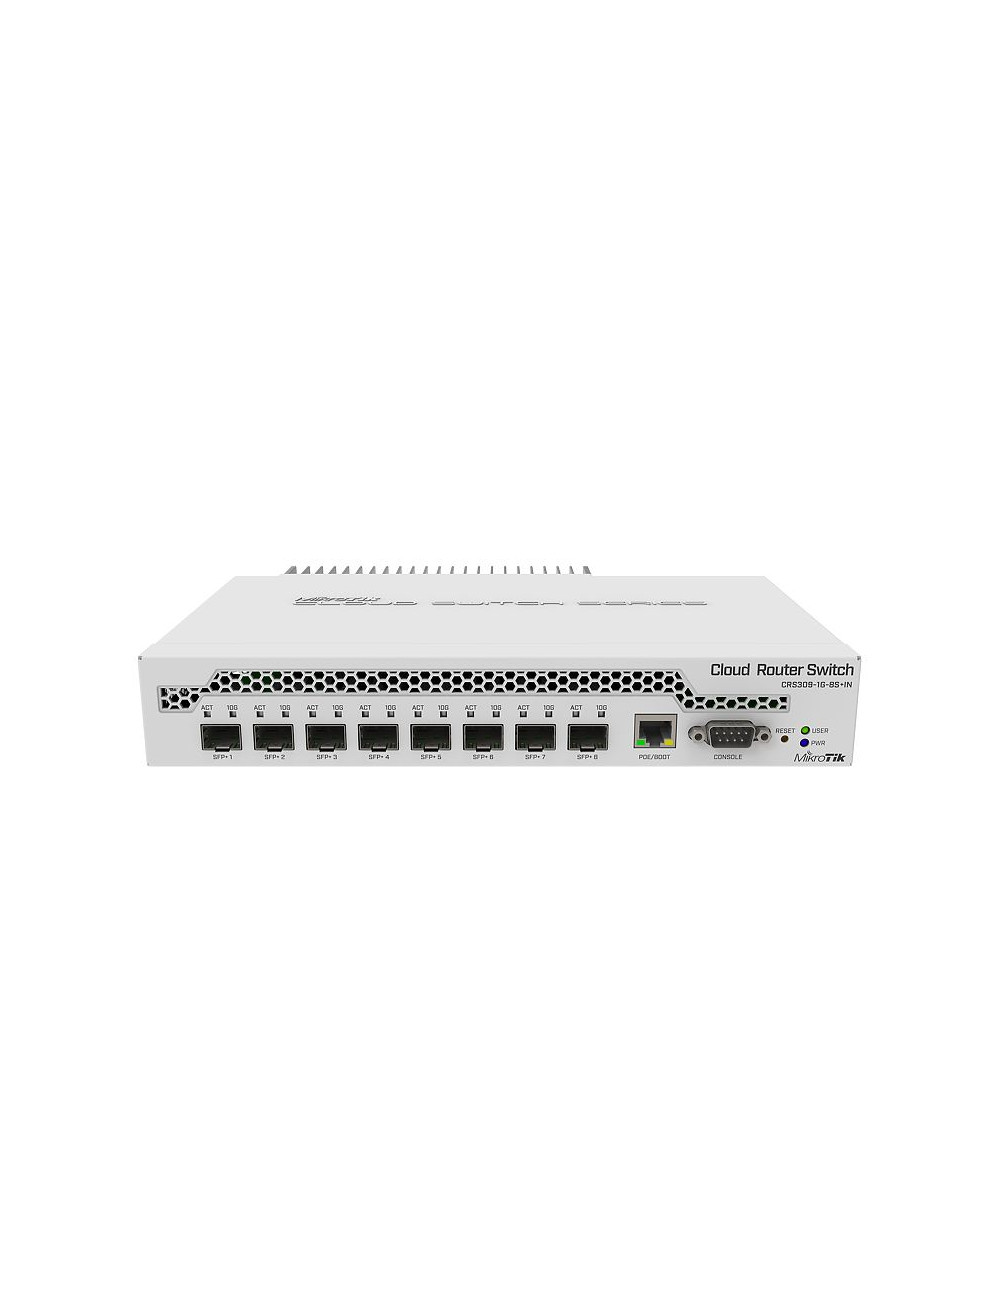 MikroTik Switch CRS309-1G-8S+IN Web managed Desktop 1 Gbps (RJ-45) ports quantity 1 SFP+ ports quantity 8